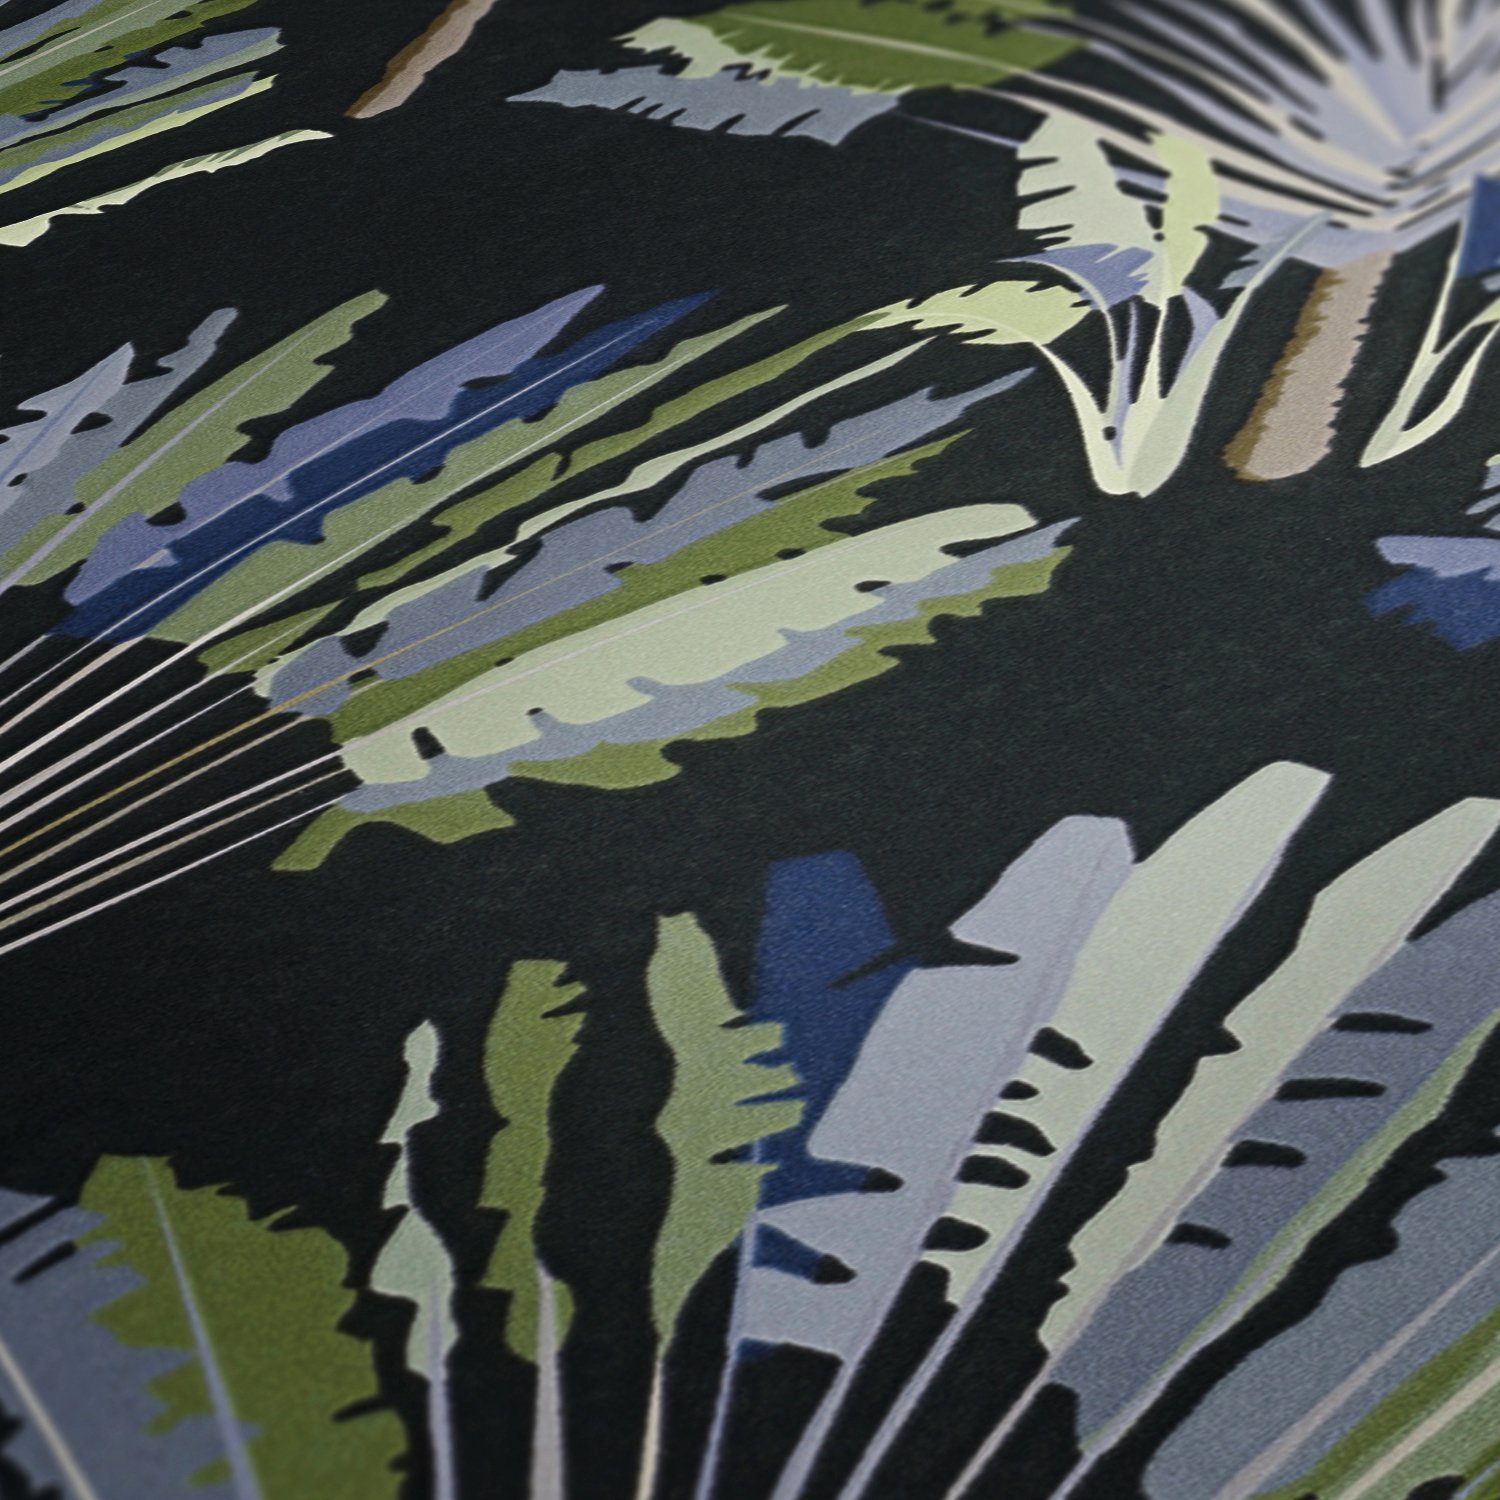 glatt, Palmentapete grün/schwarz/blau Architects Paper Federn tropisch, Création Vliestapete botanisch, floral, Tapete A.S. Jungle Dschungel Chic,